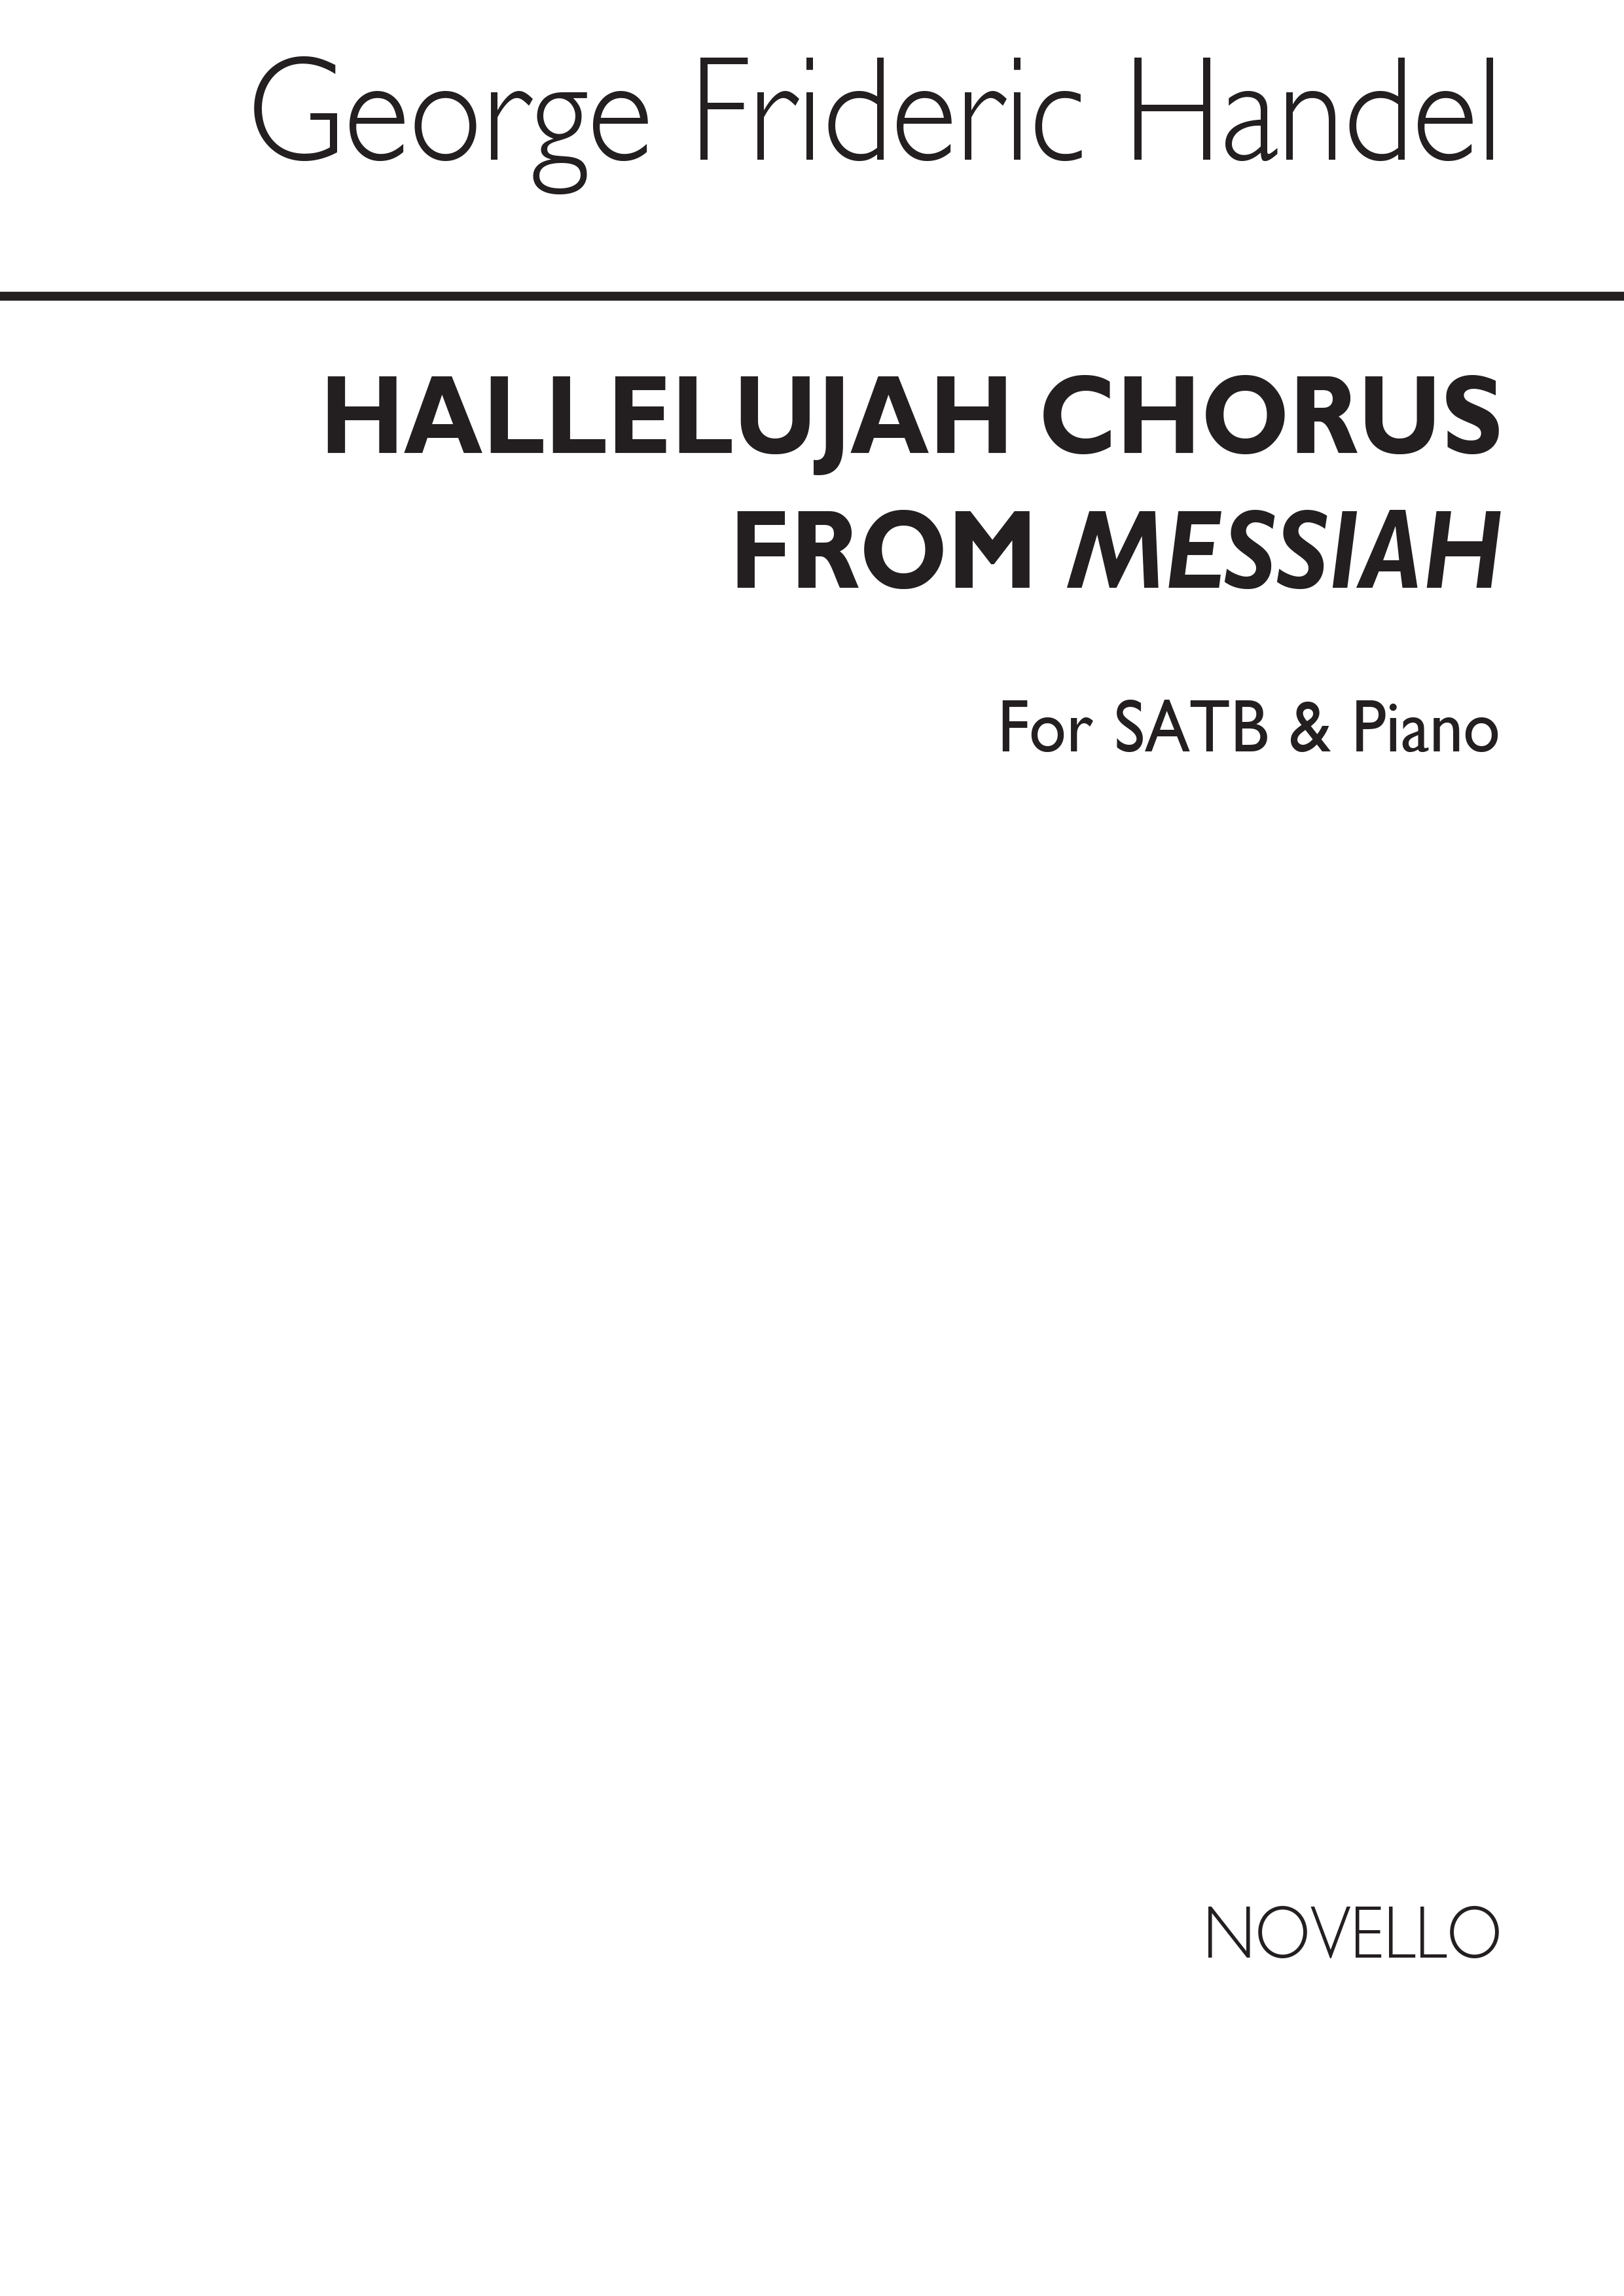 Georg Friedrich Hndel: Hallelujah Chorus (Messiah): SATB: Vocal Score